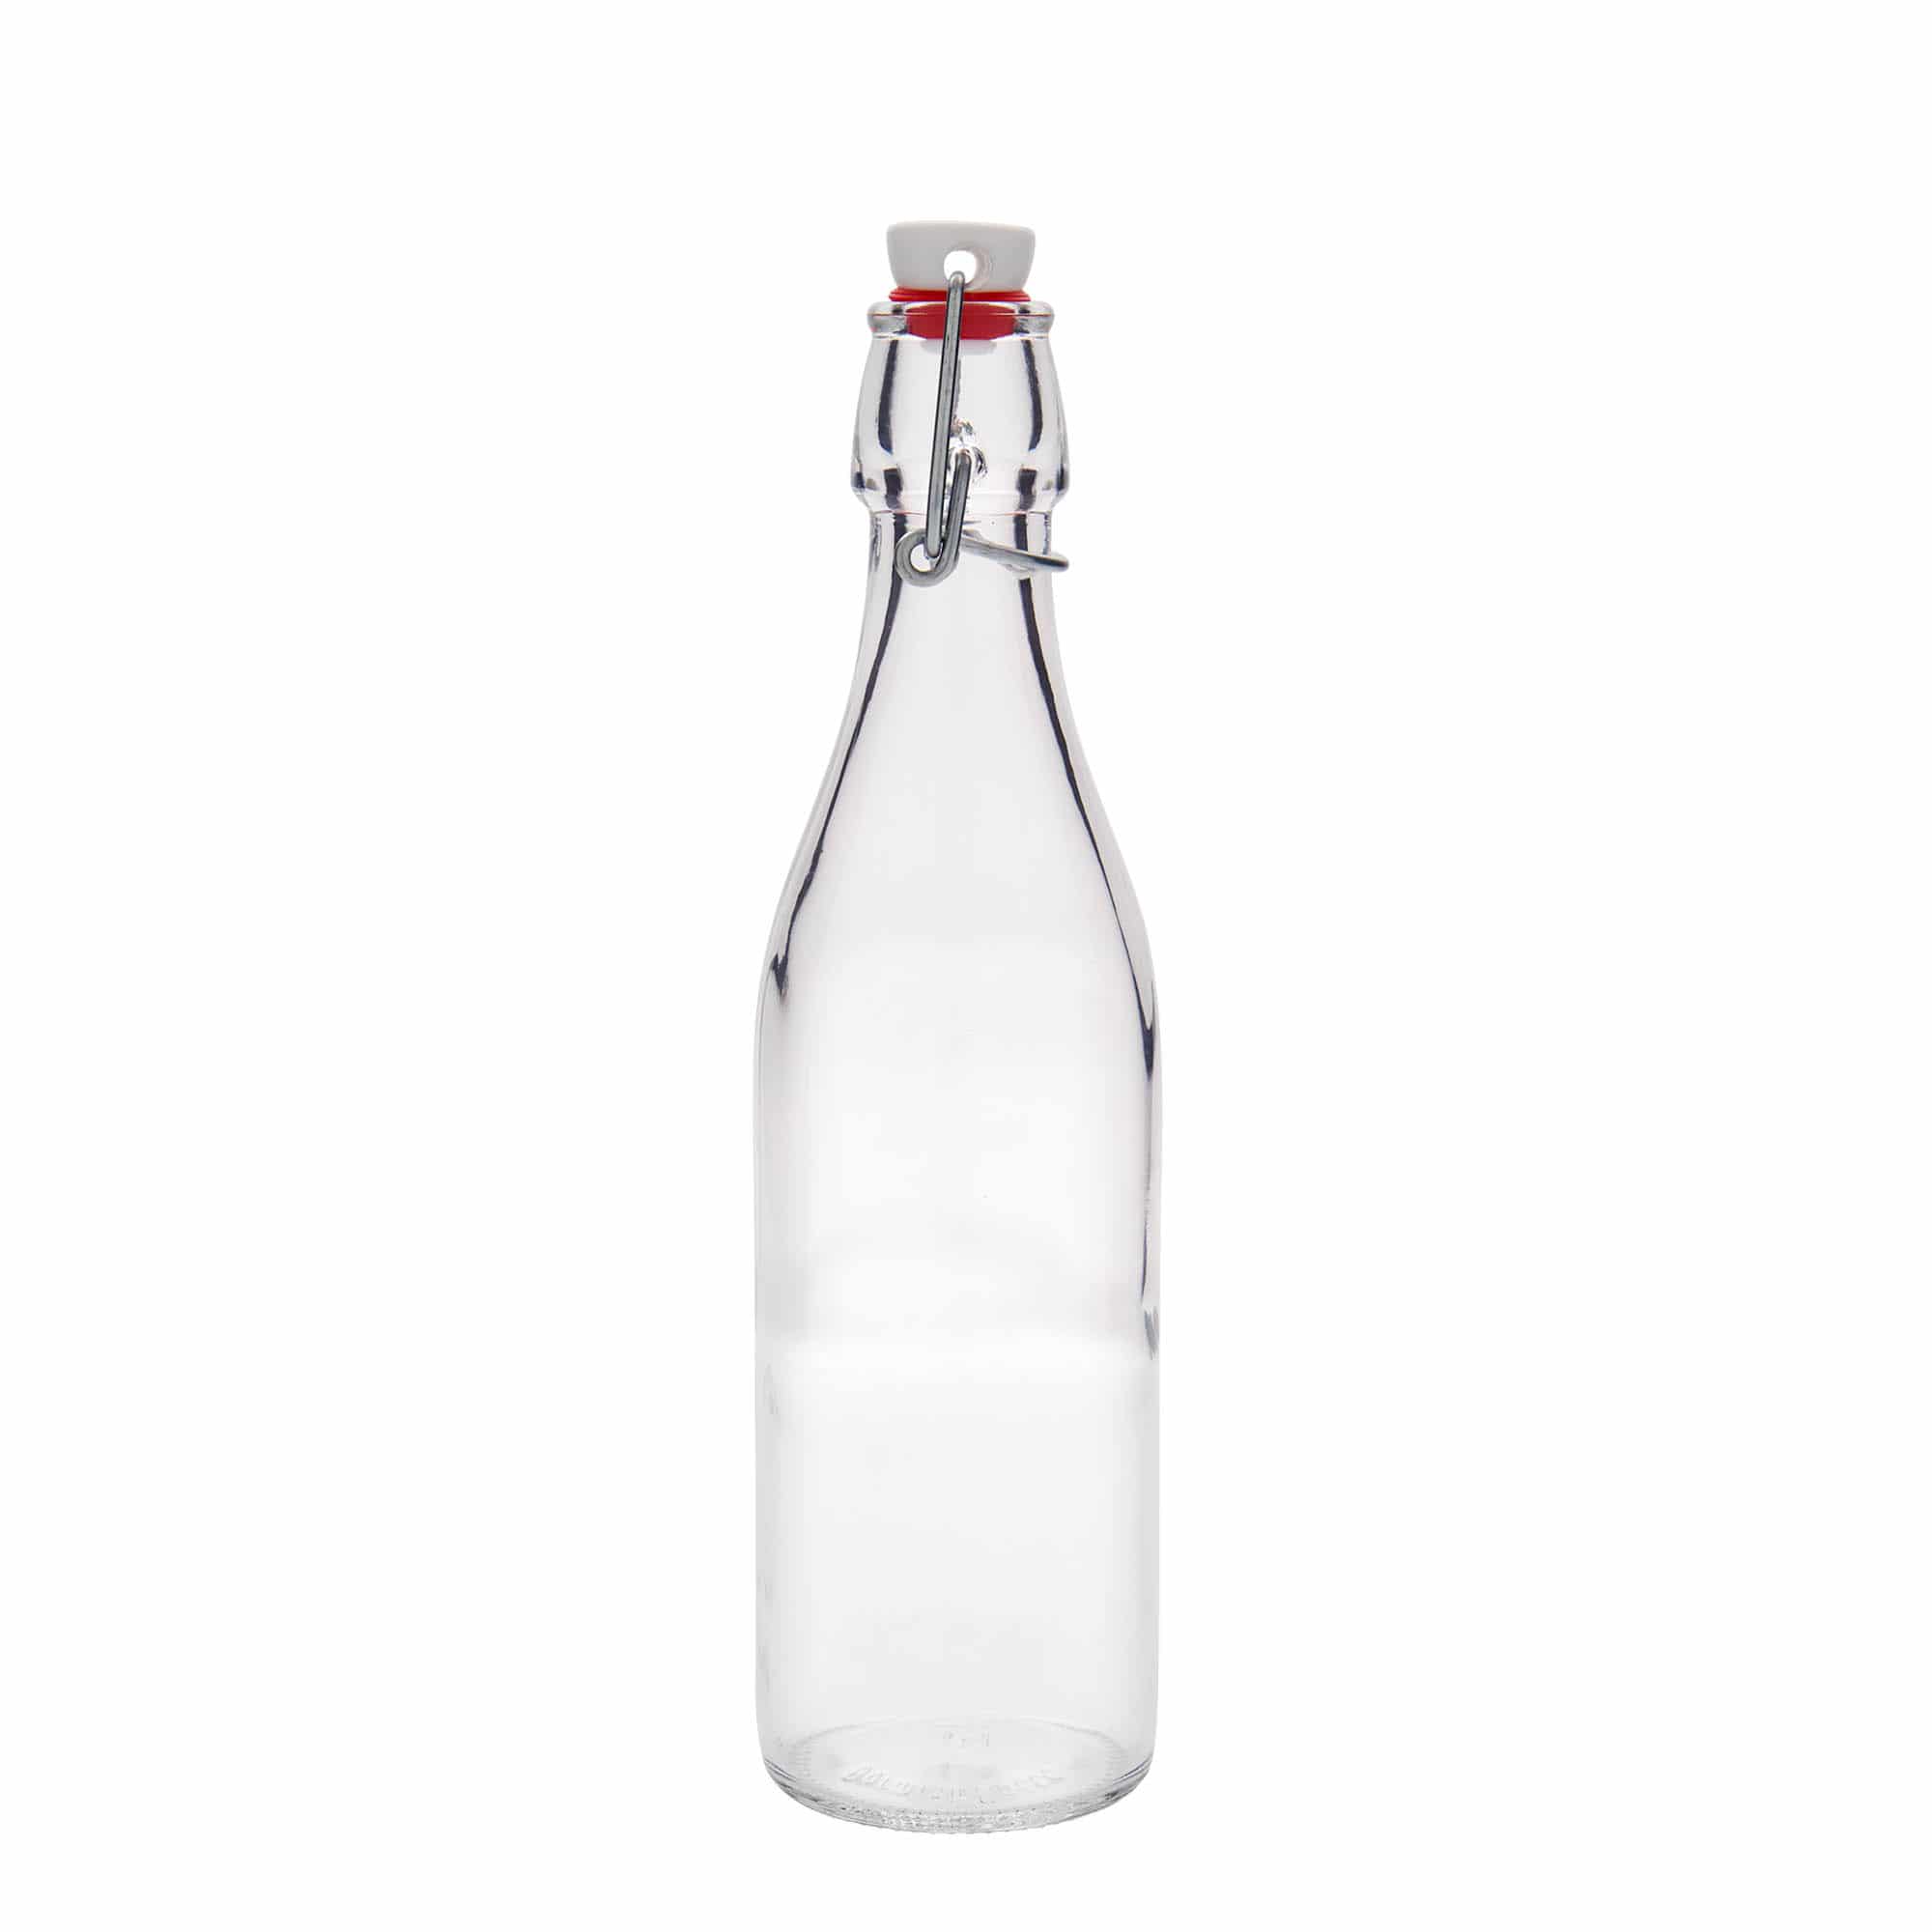 500 ml glass bottle 'Giara', closure: swing top